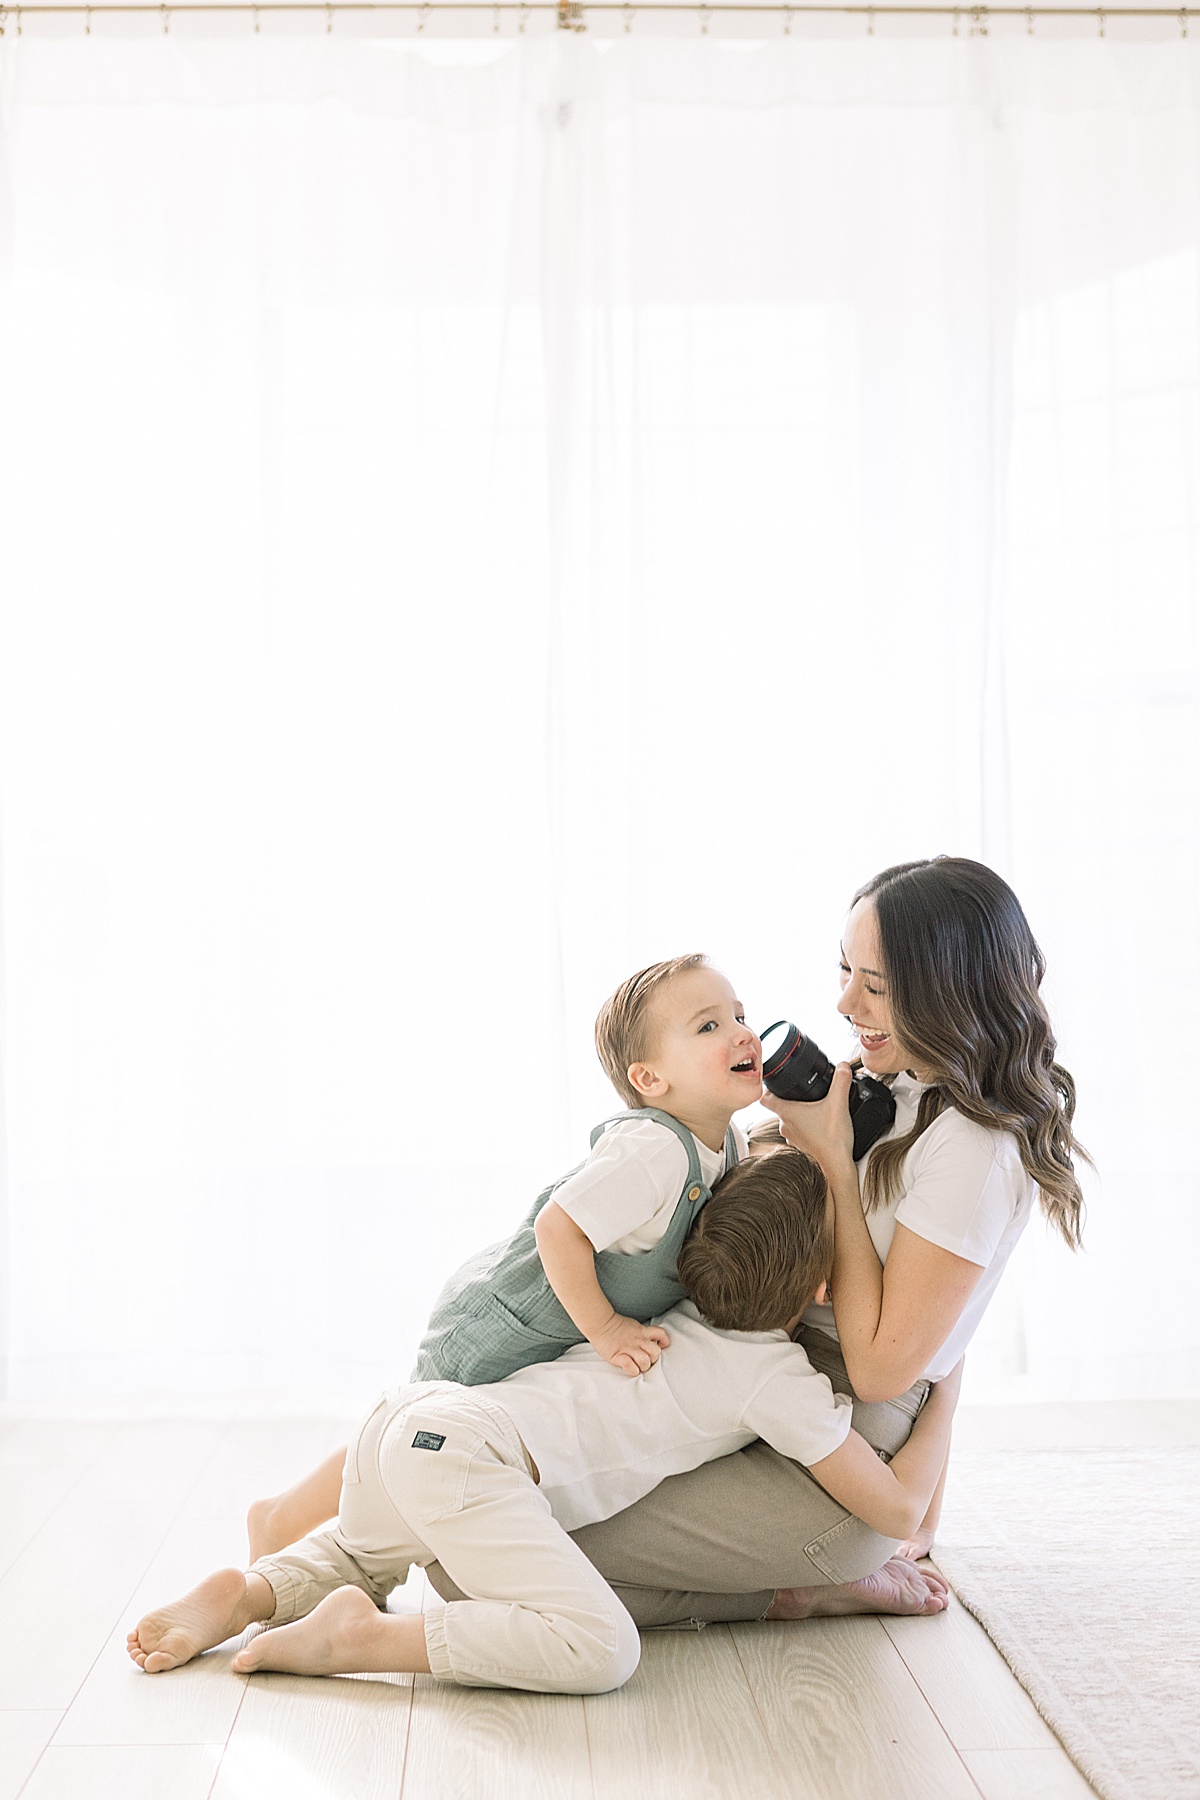 Emily Gerald, Virginia newborn & motherhood photographer | Brand session by Abby Grace Photography